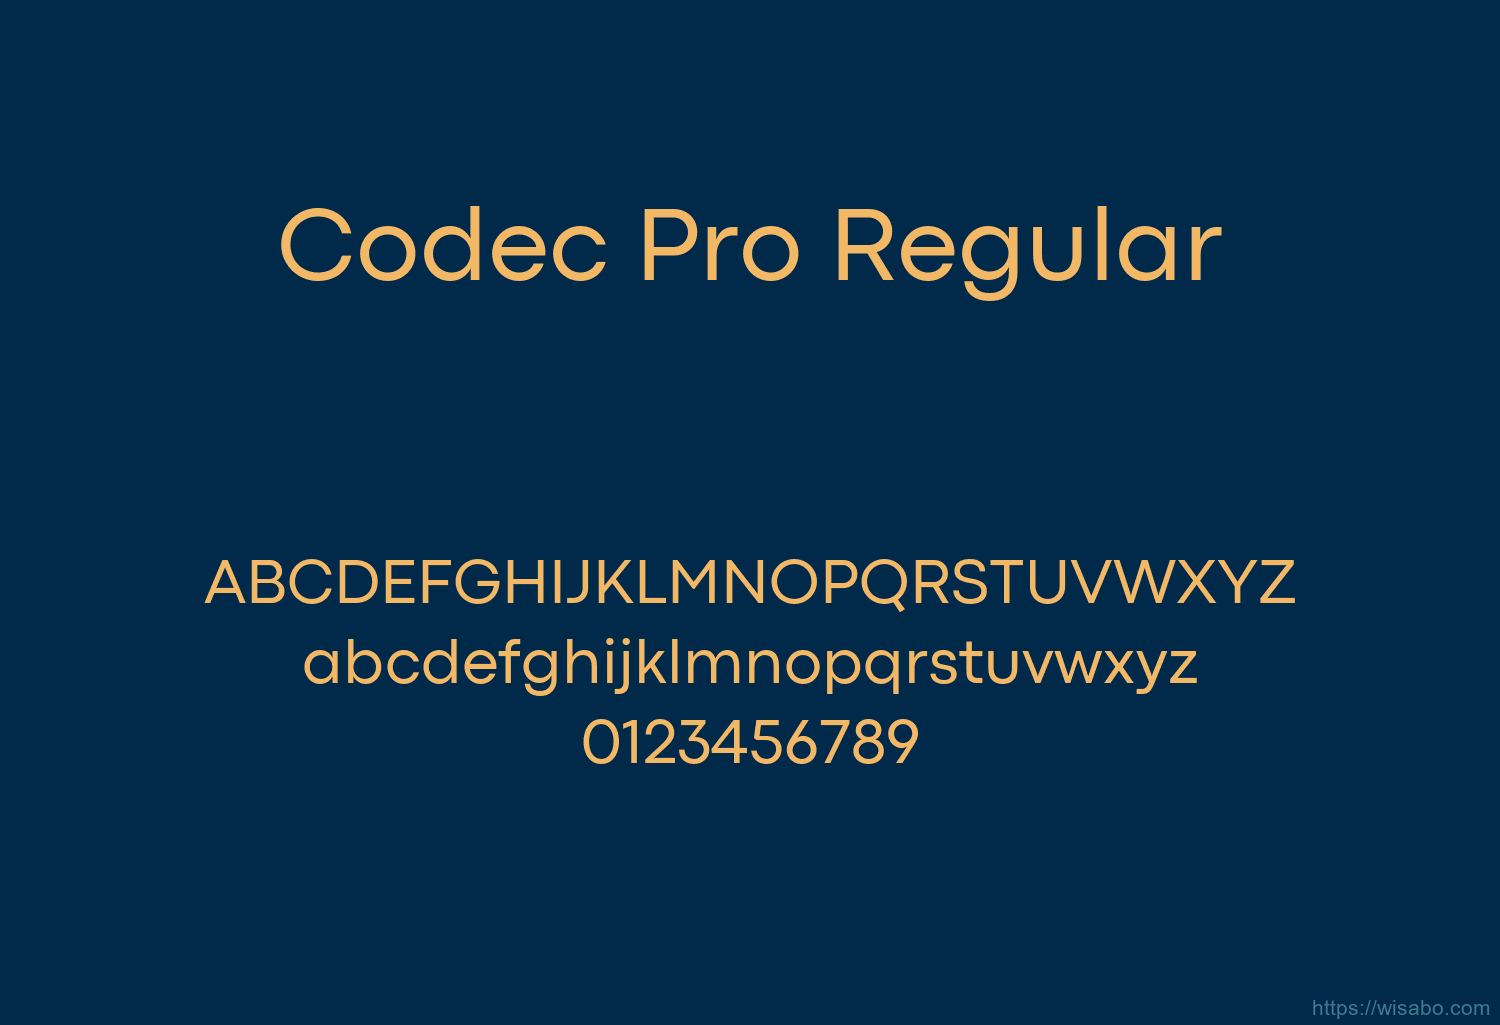 Codec Pro Regular